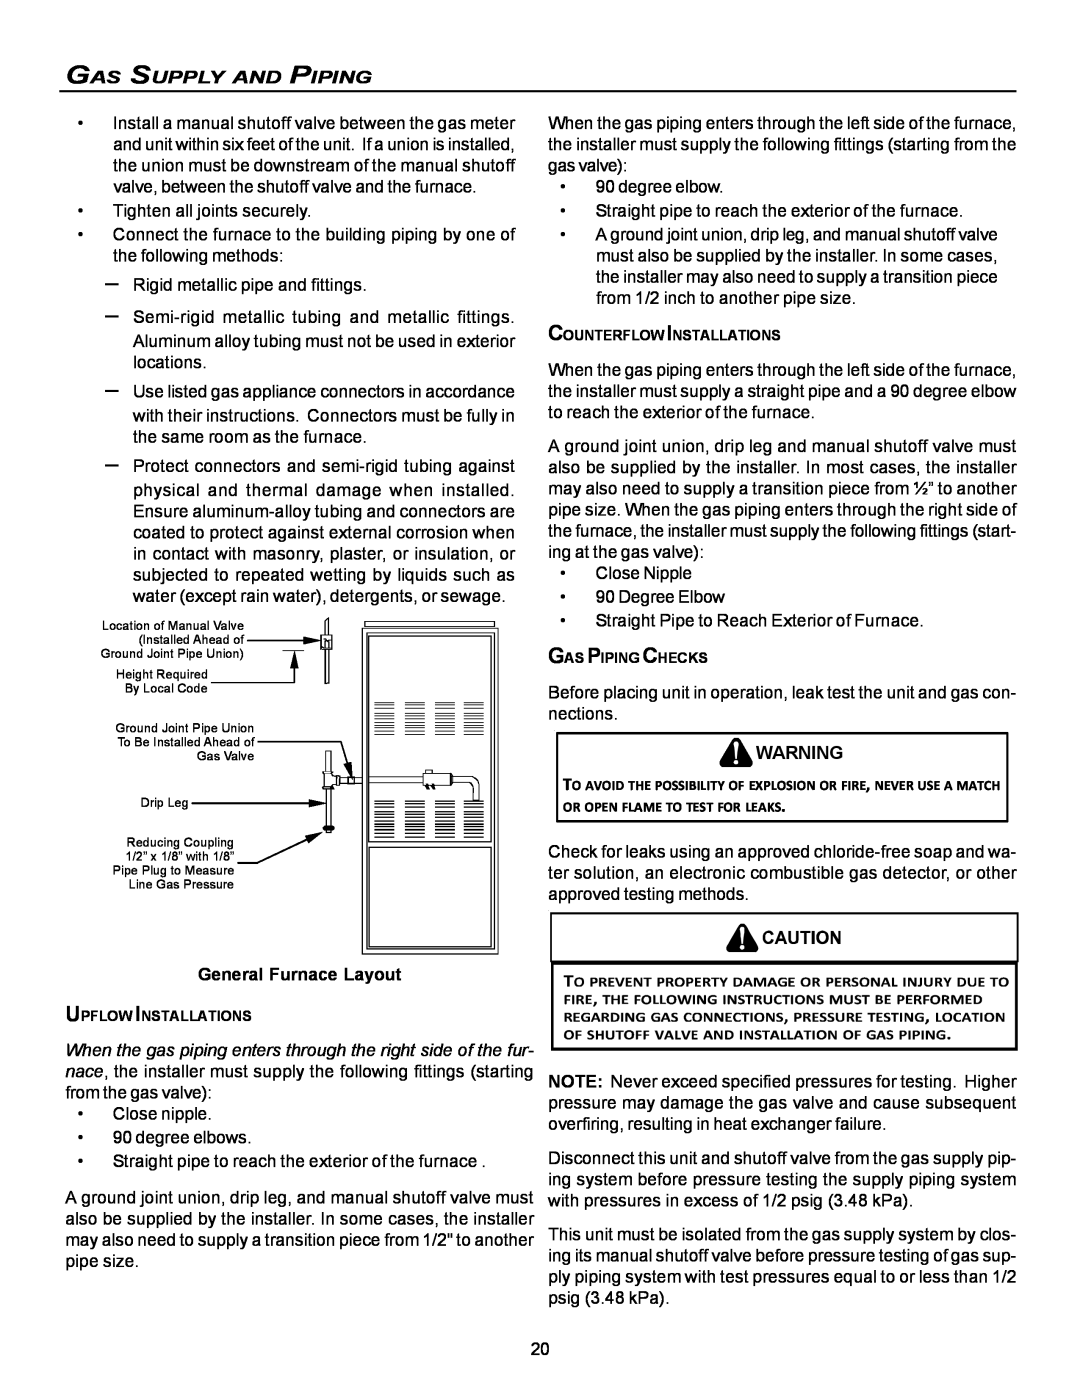 Goodman Mfg VC8 instruction manual Gas Supply And Piping, General Furnace Layout 